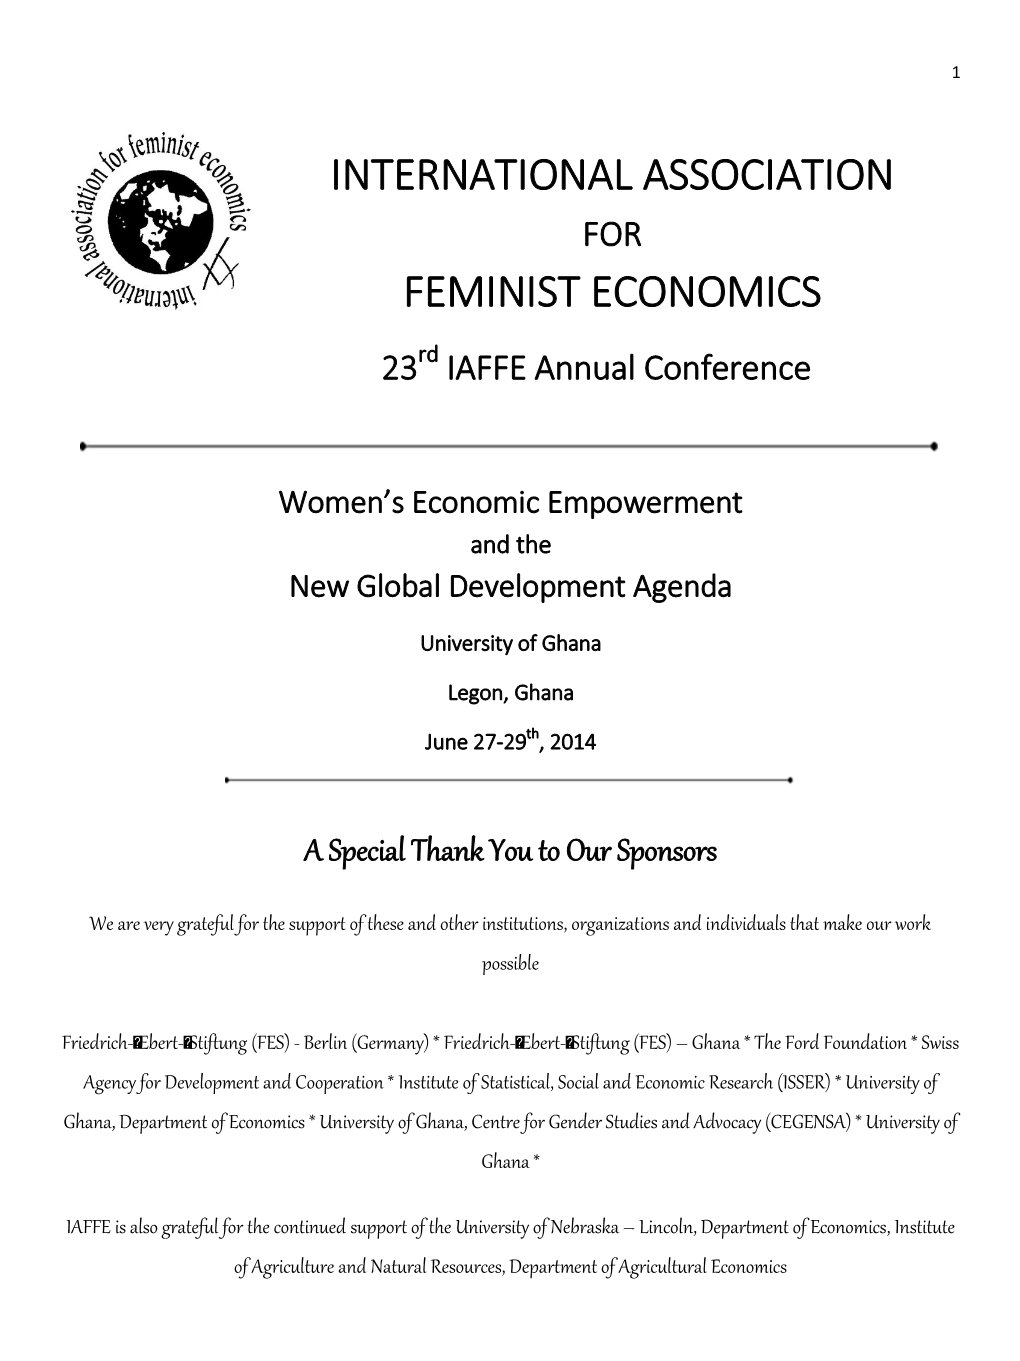 2014 IAFFE Annual Conference Program